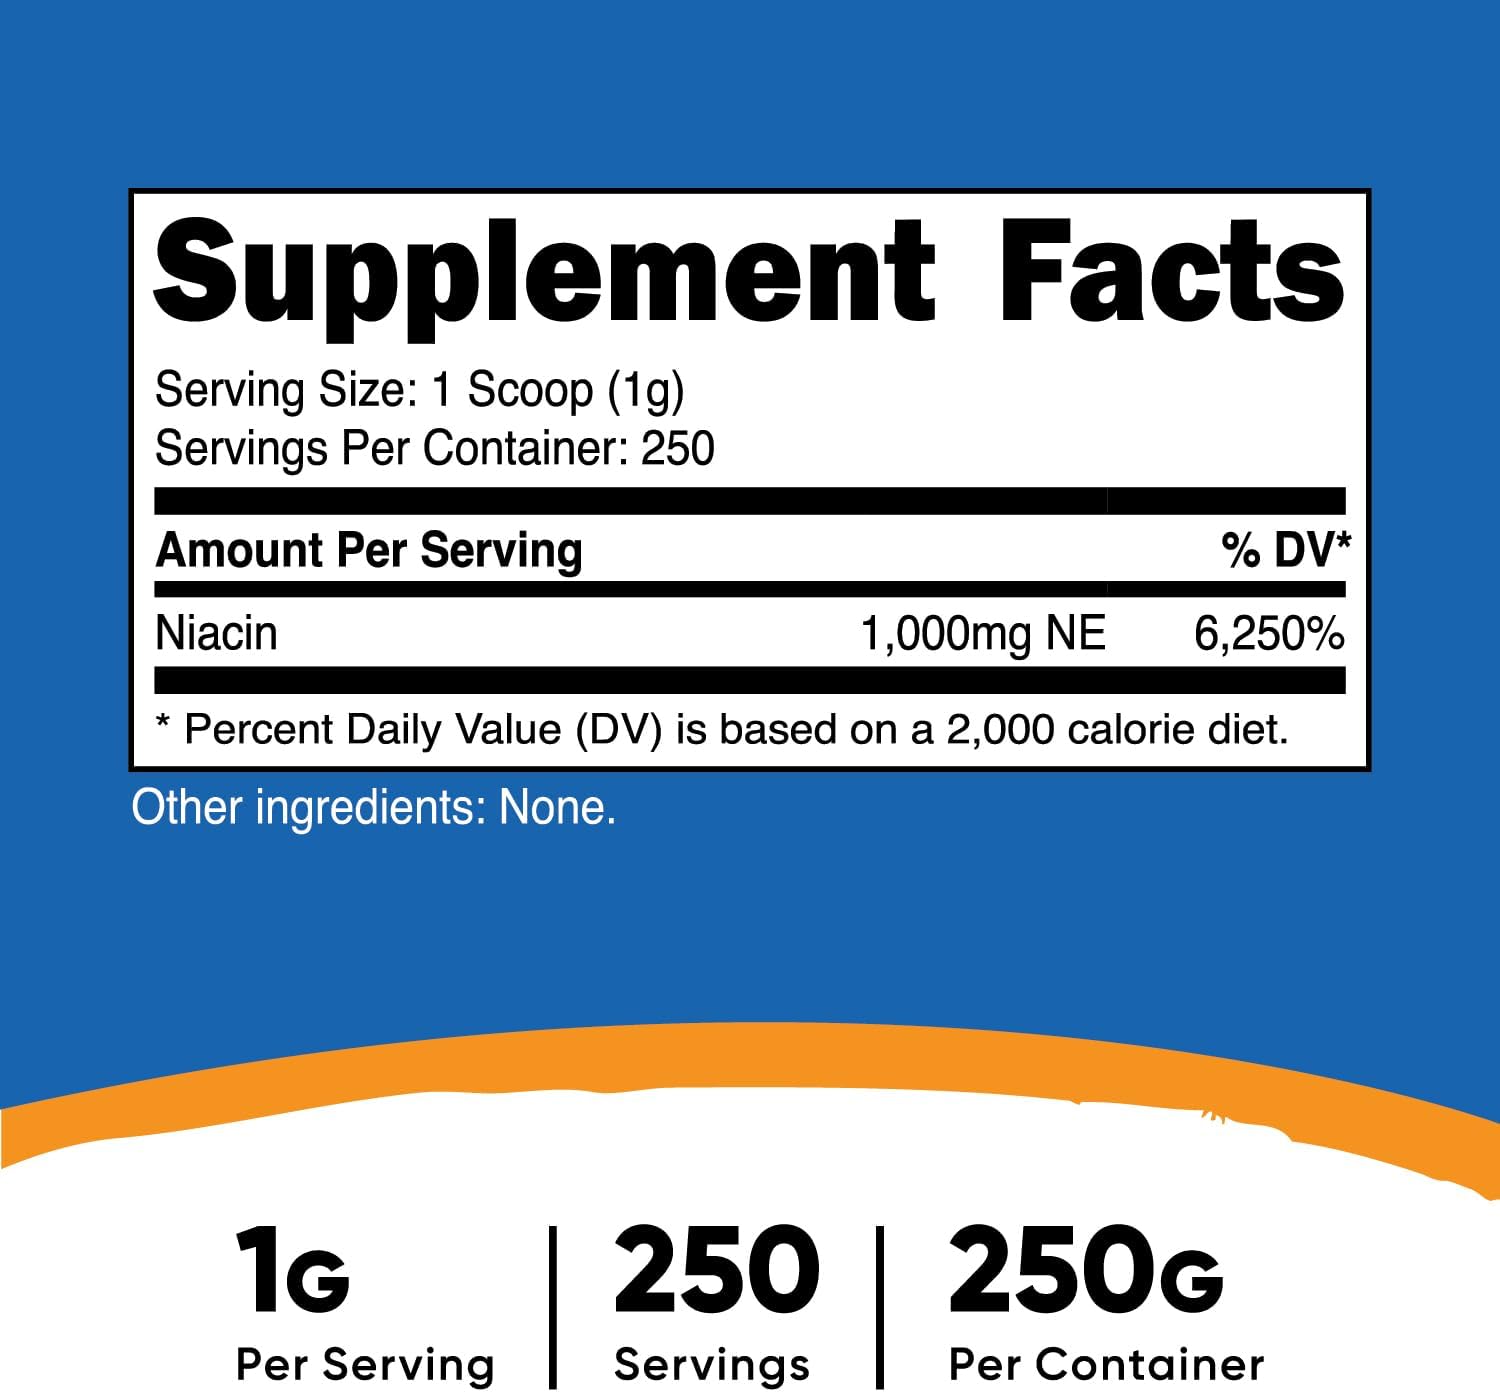 Nutricost Niacin Vitamin B3 250g Powder (250 servings)